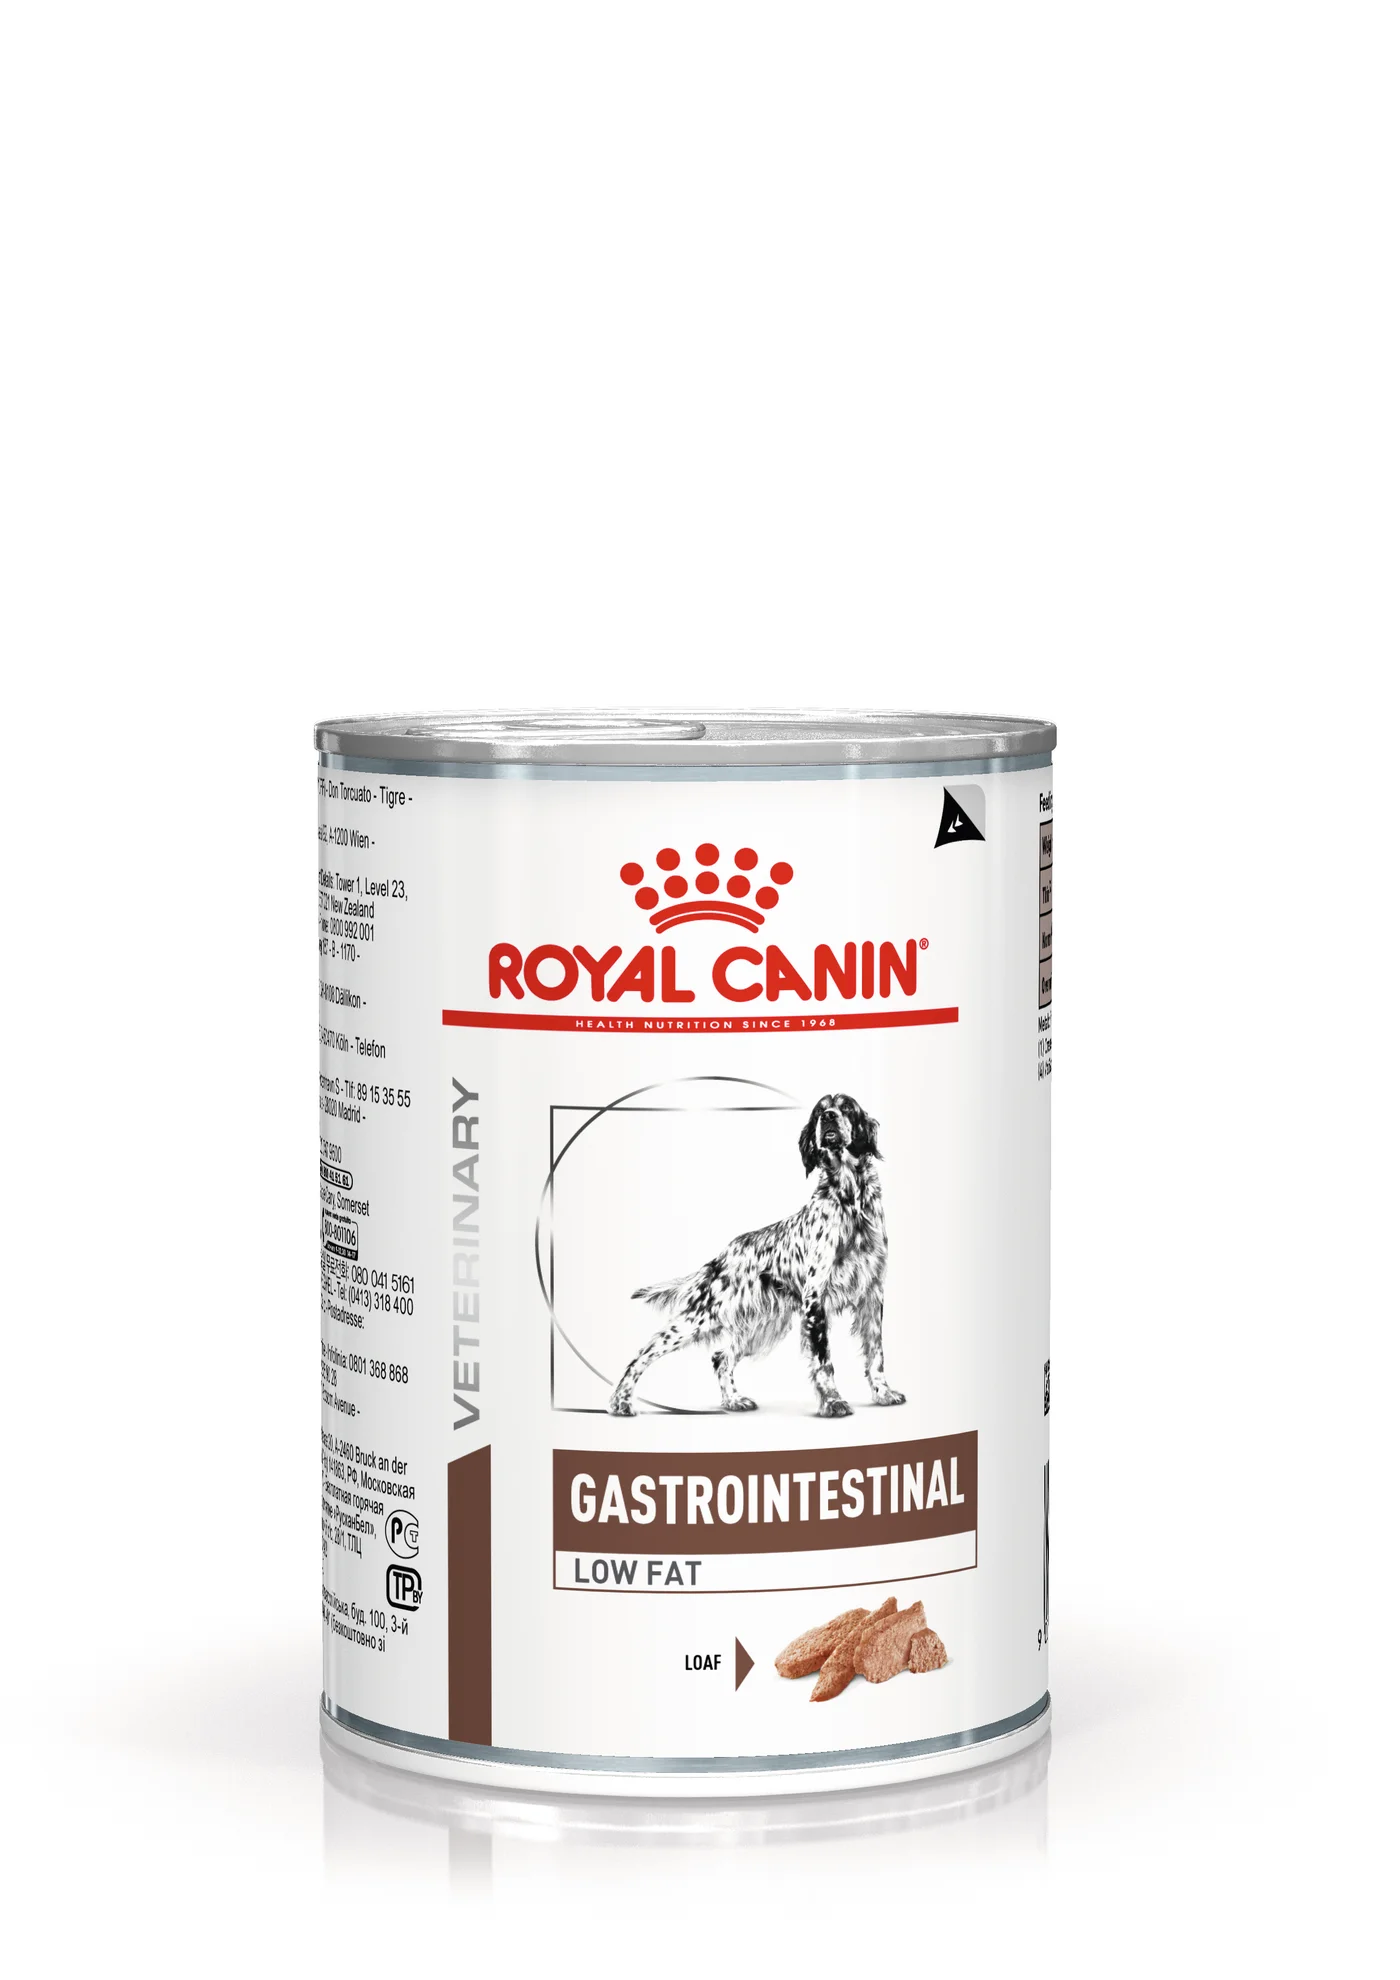 ROYAL CANIN Gastrointestinal Low Fat 420g puszka